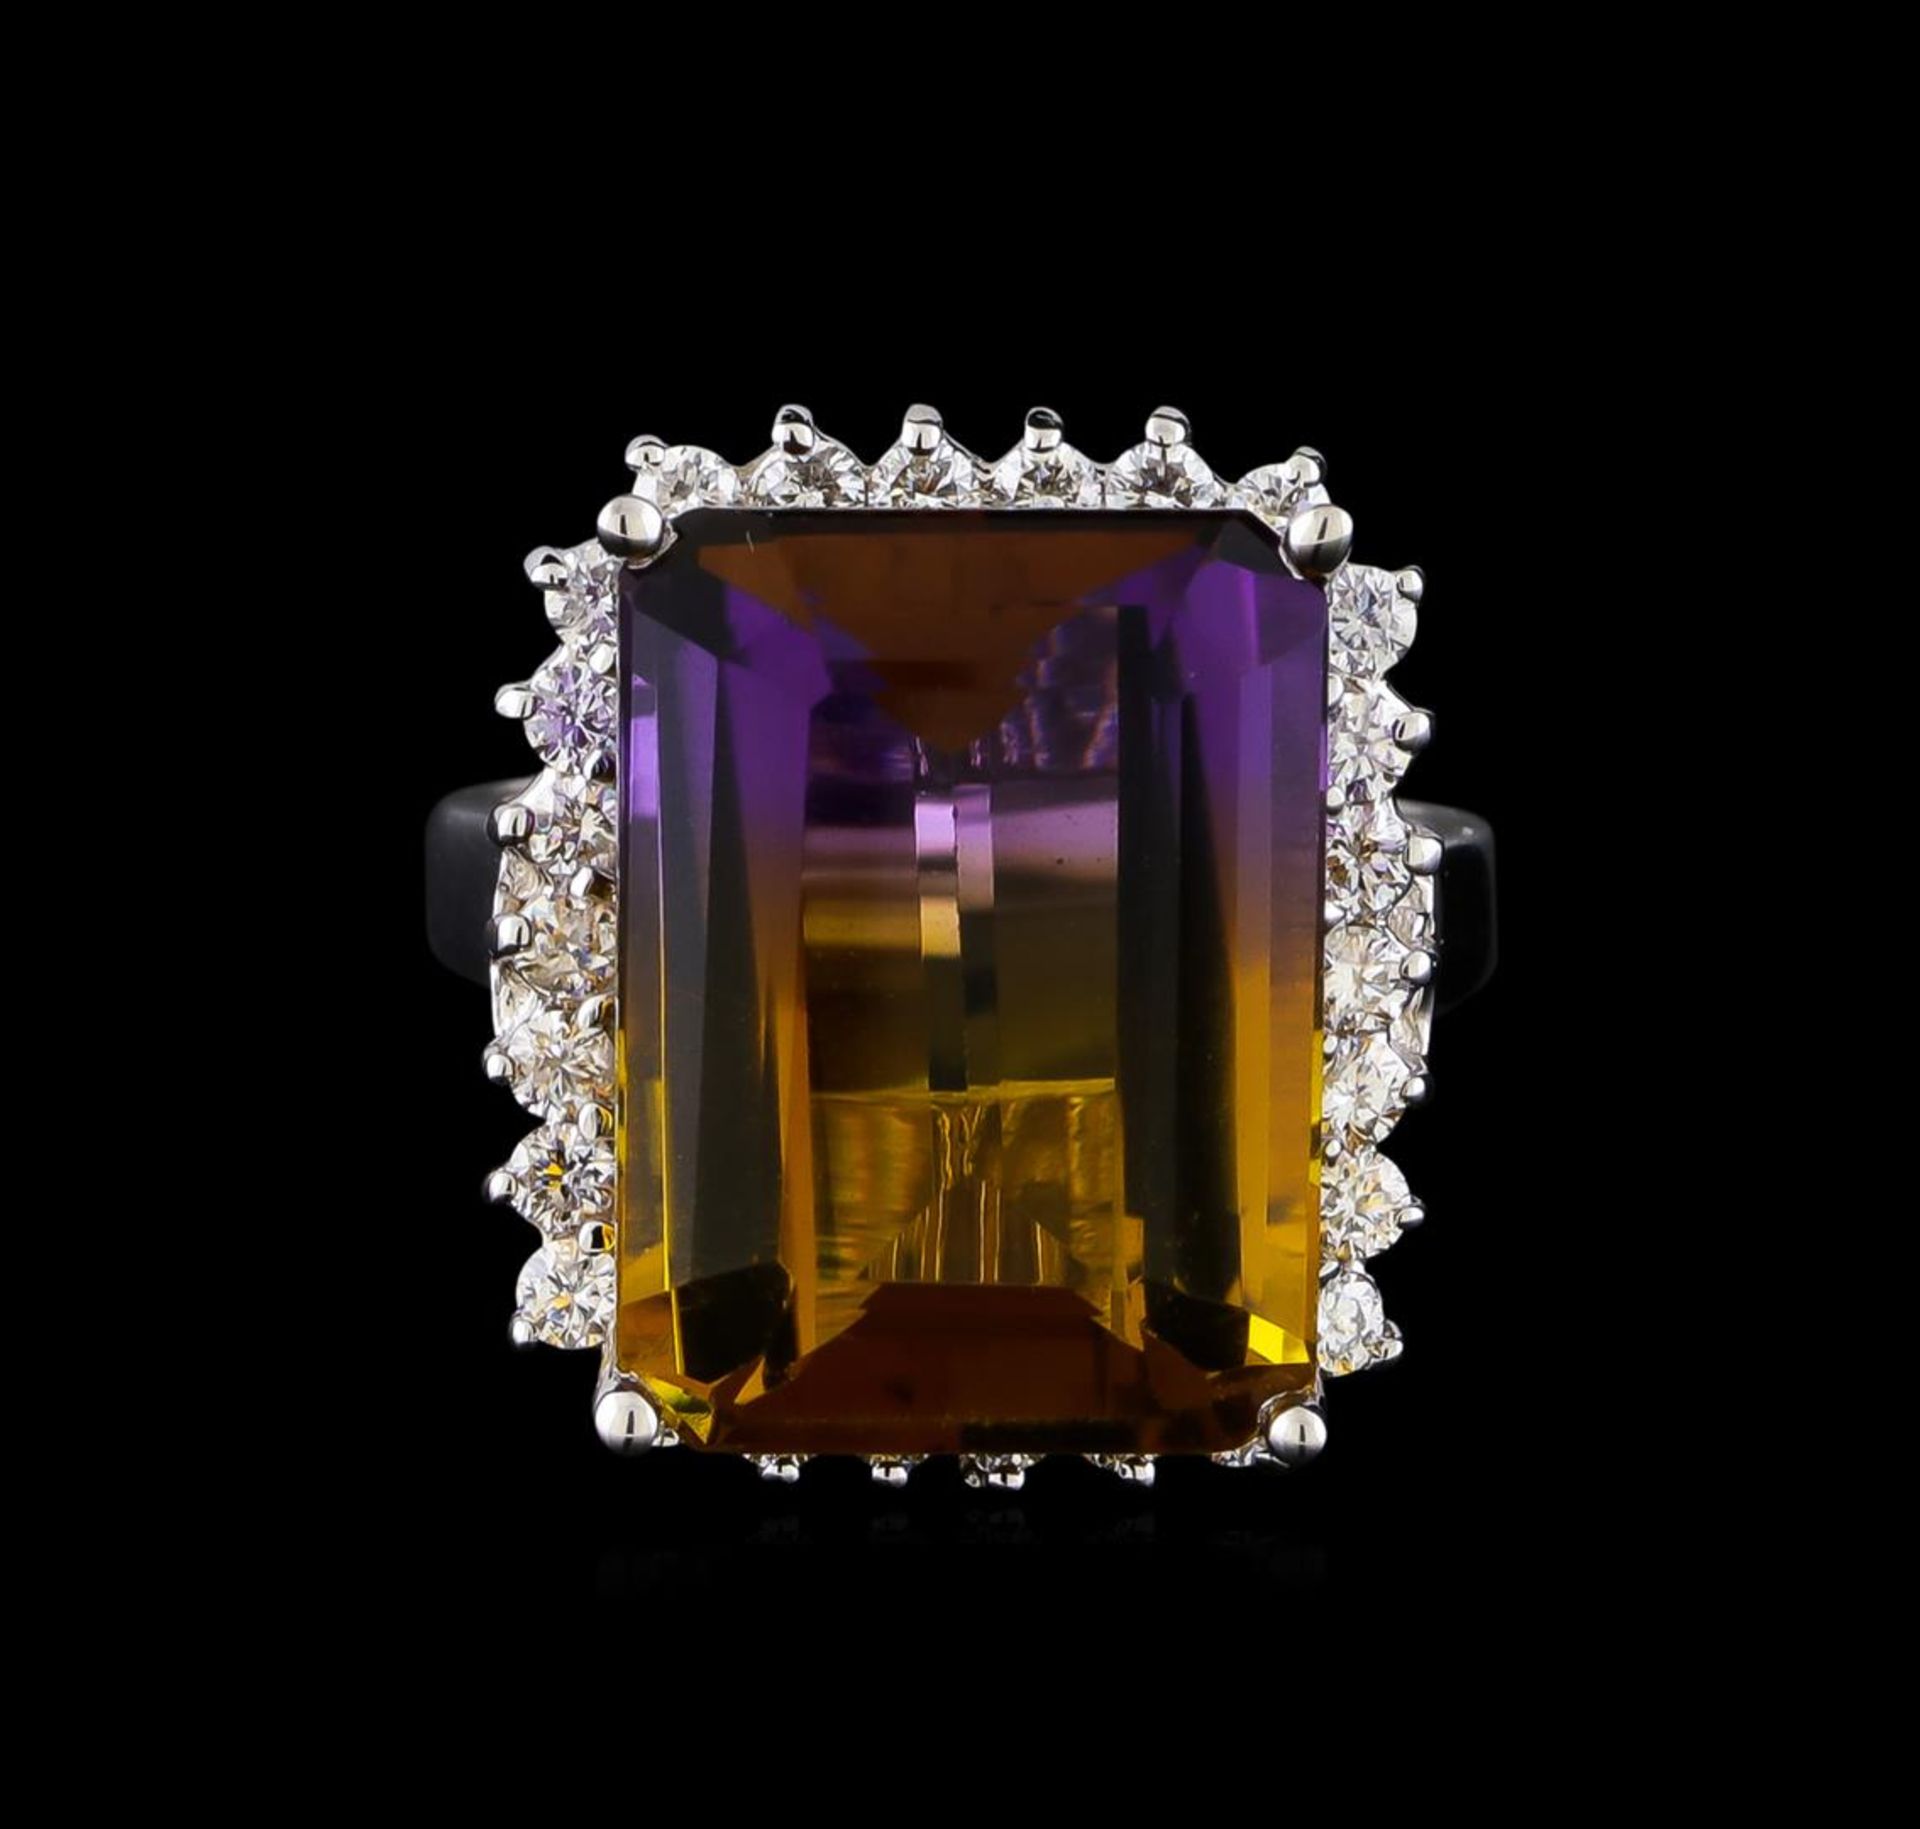 11.18 ctw Ametrine Quartz and Diamond Ring - 14KT White Gold - Image 2 of 5